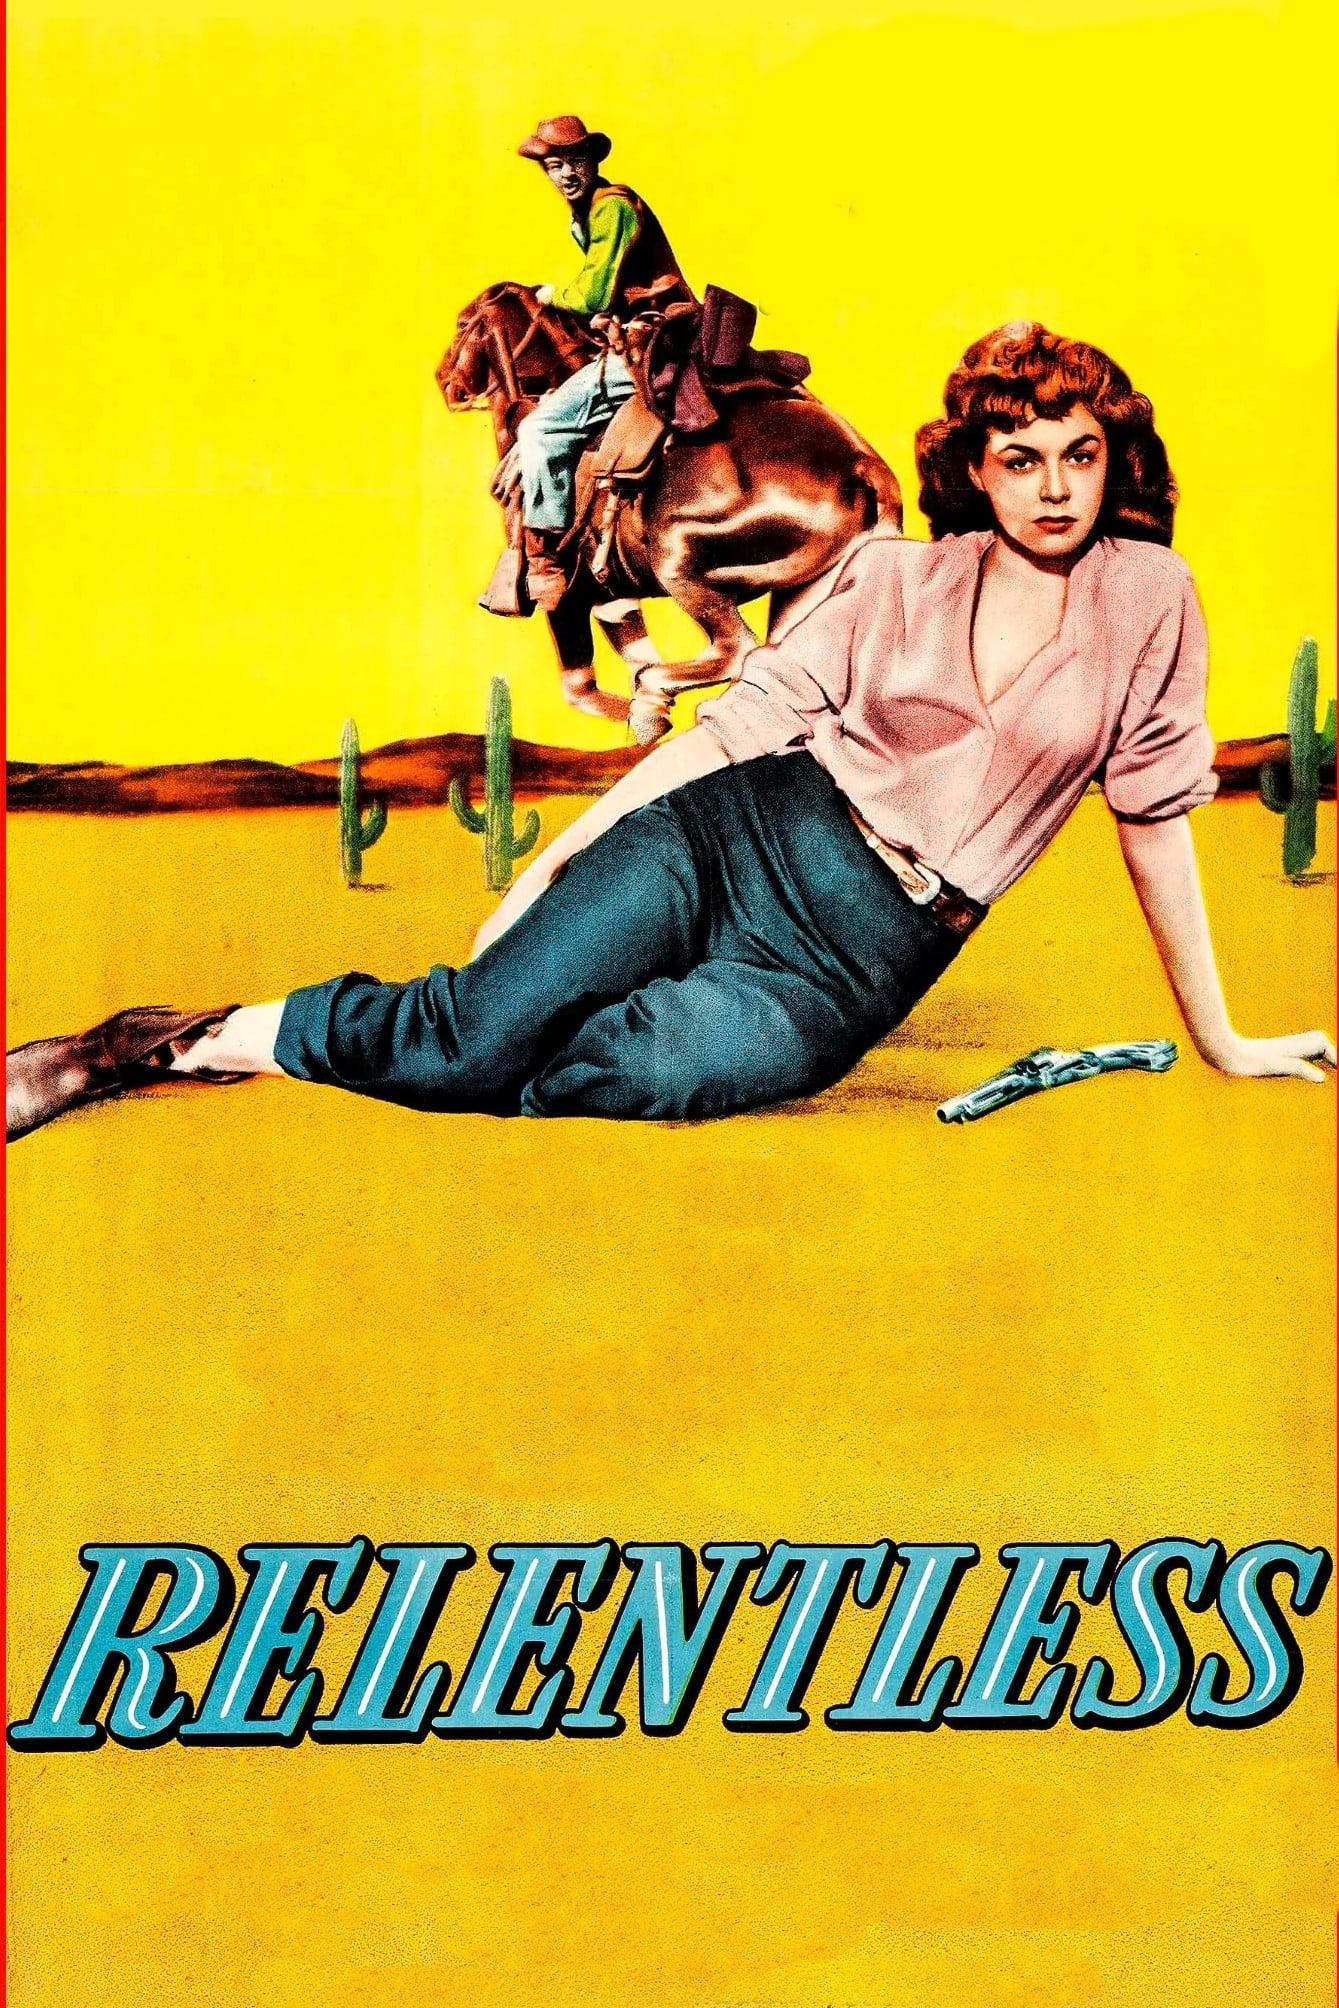 Relentless poster